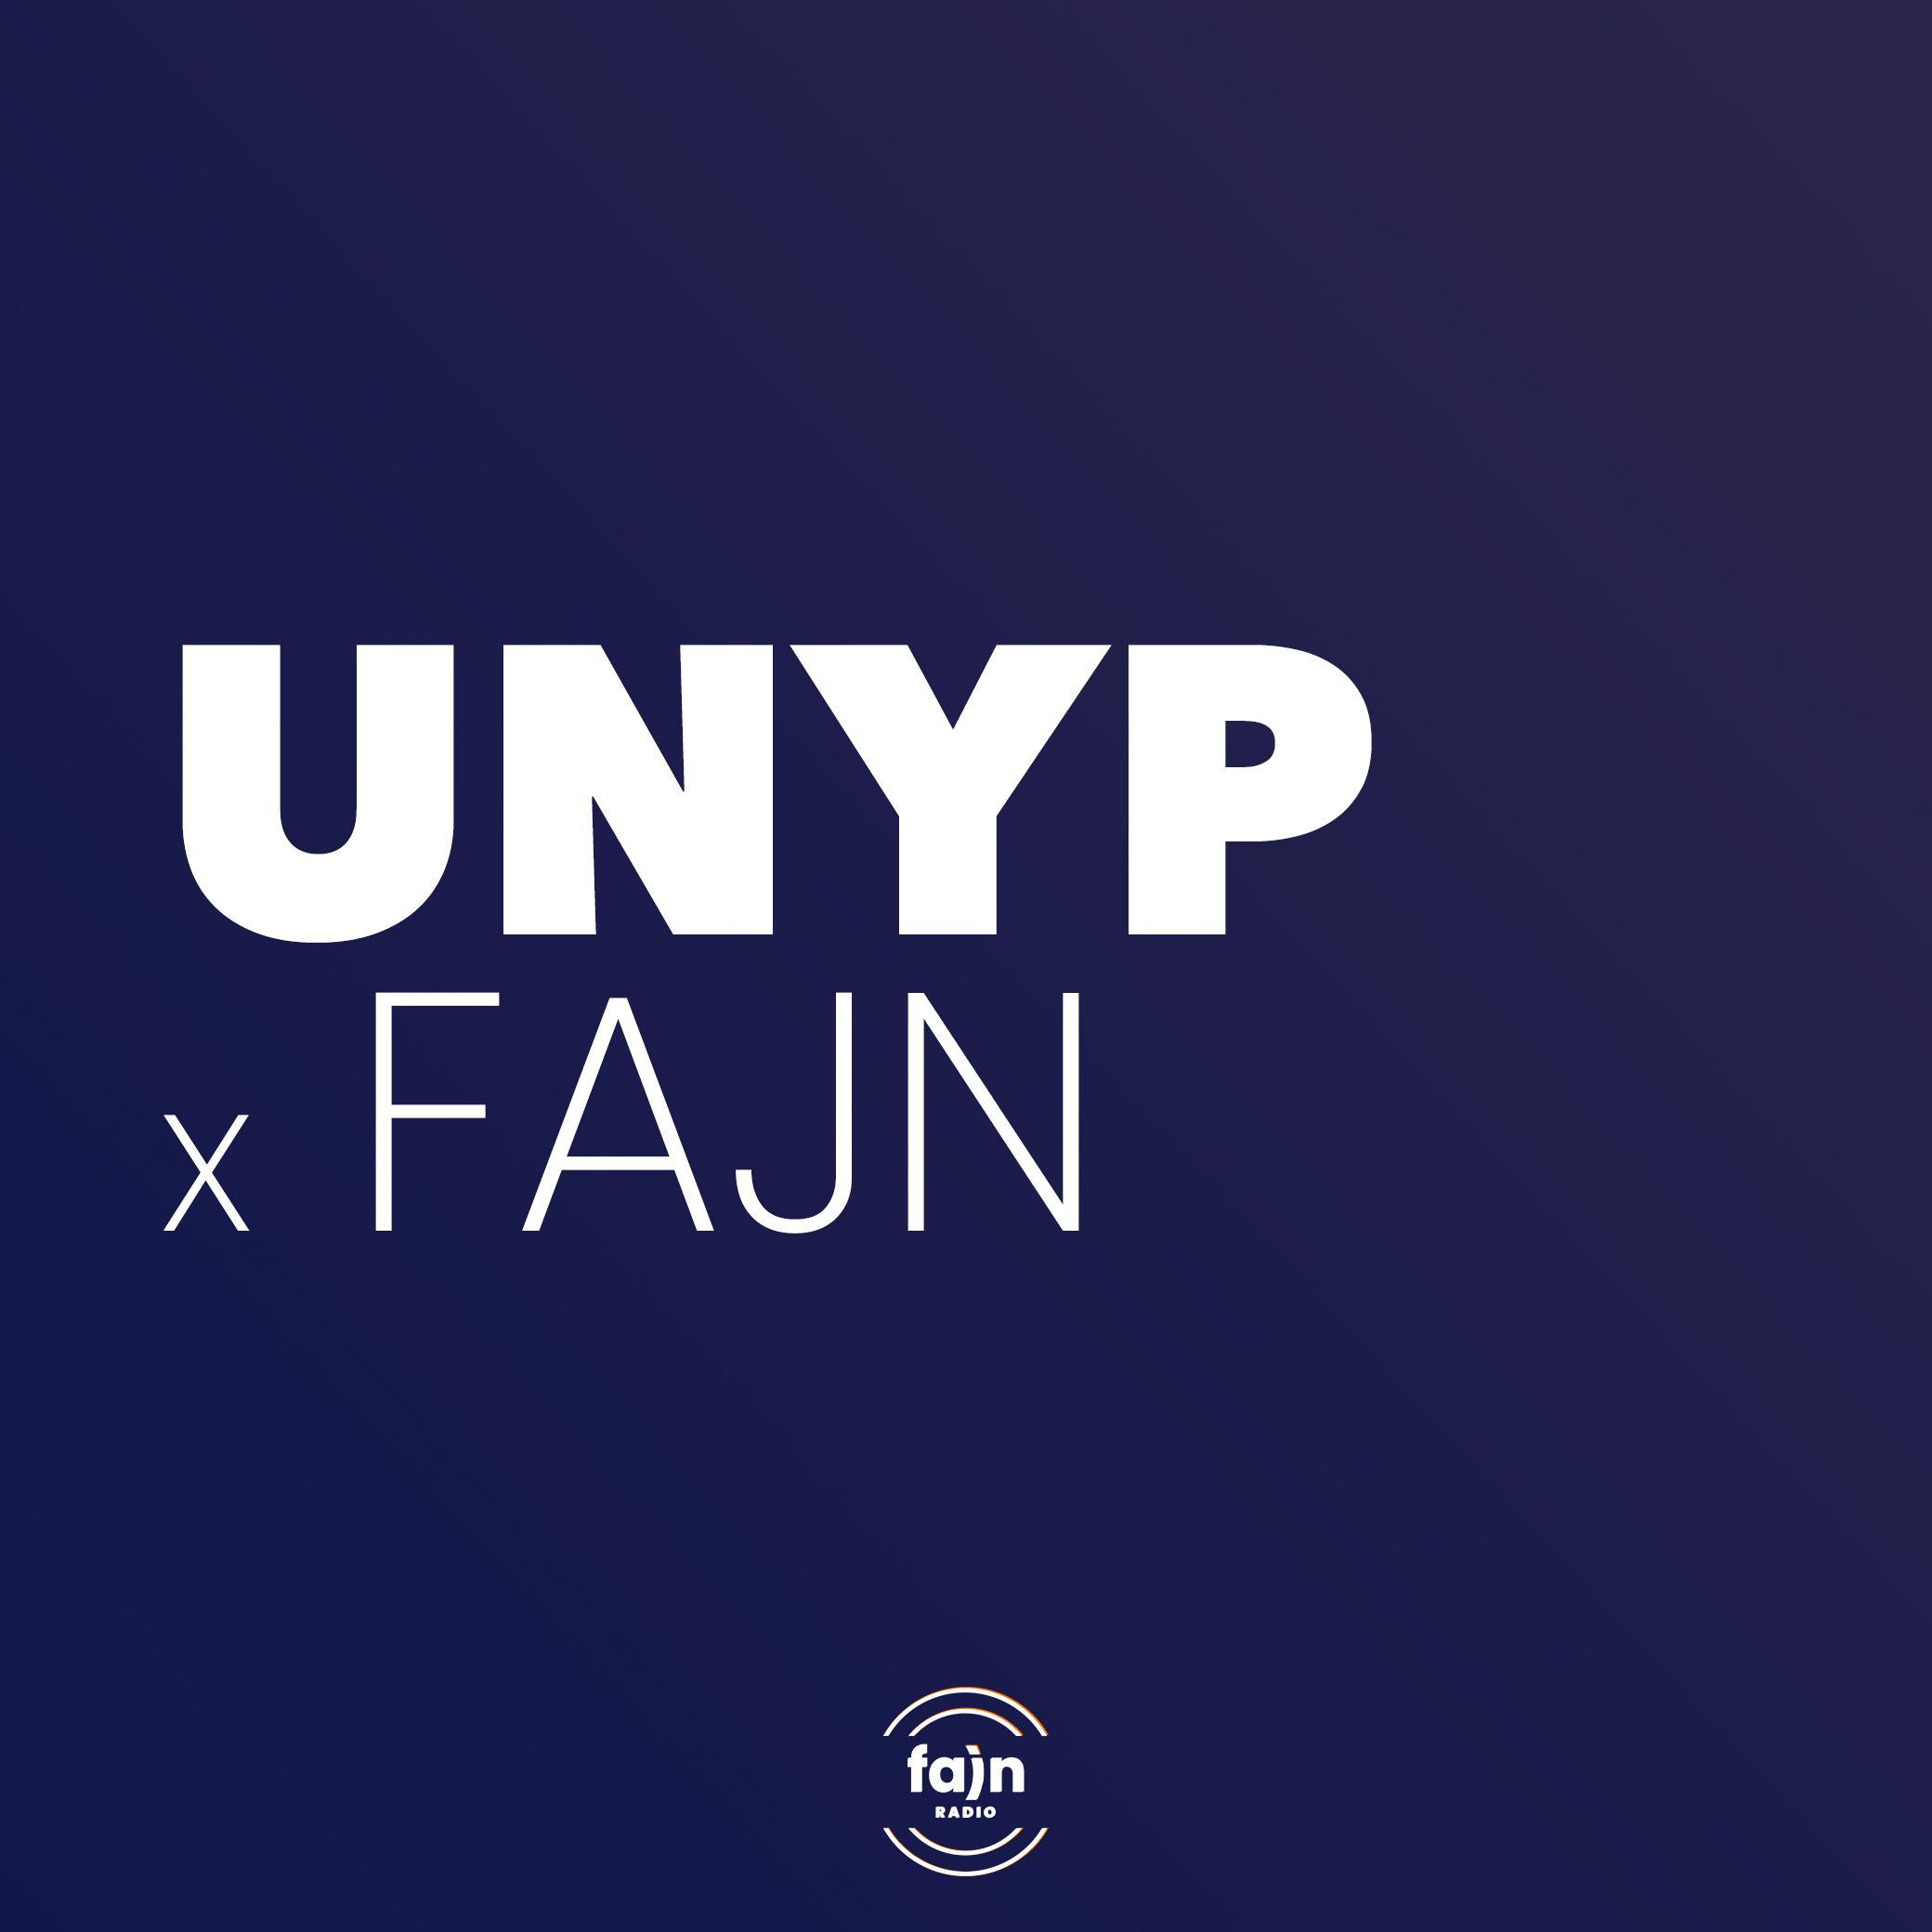 UNYP x Fajn (Dan Žlebek & Todd Nesbitt)